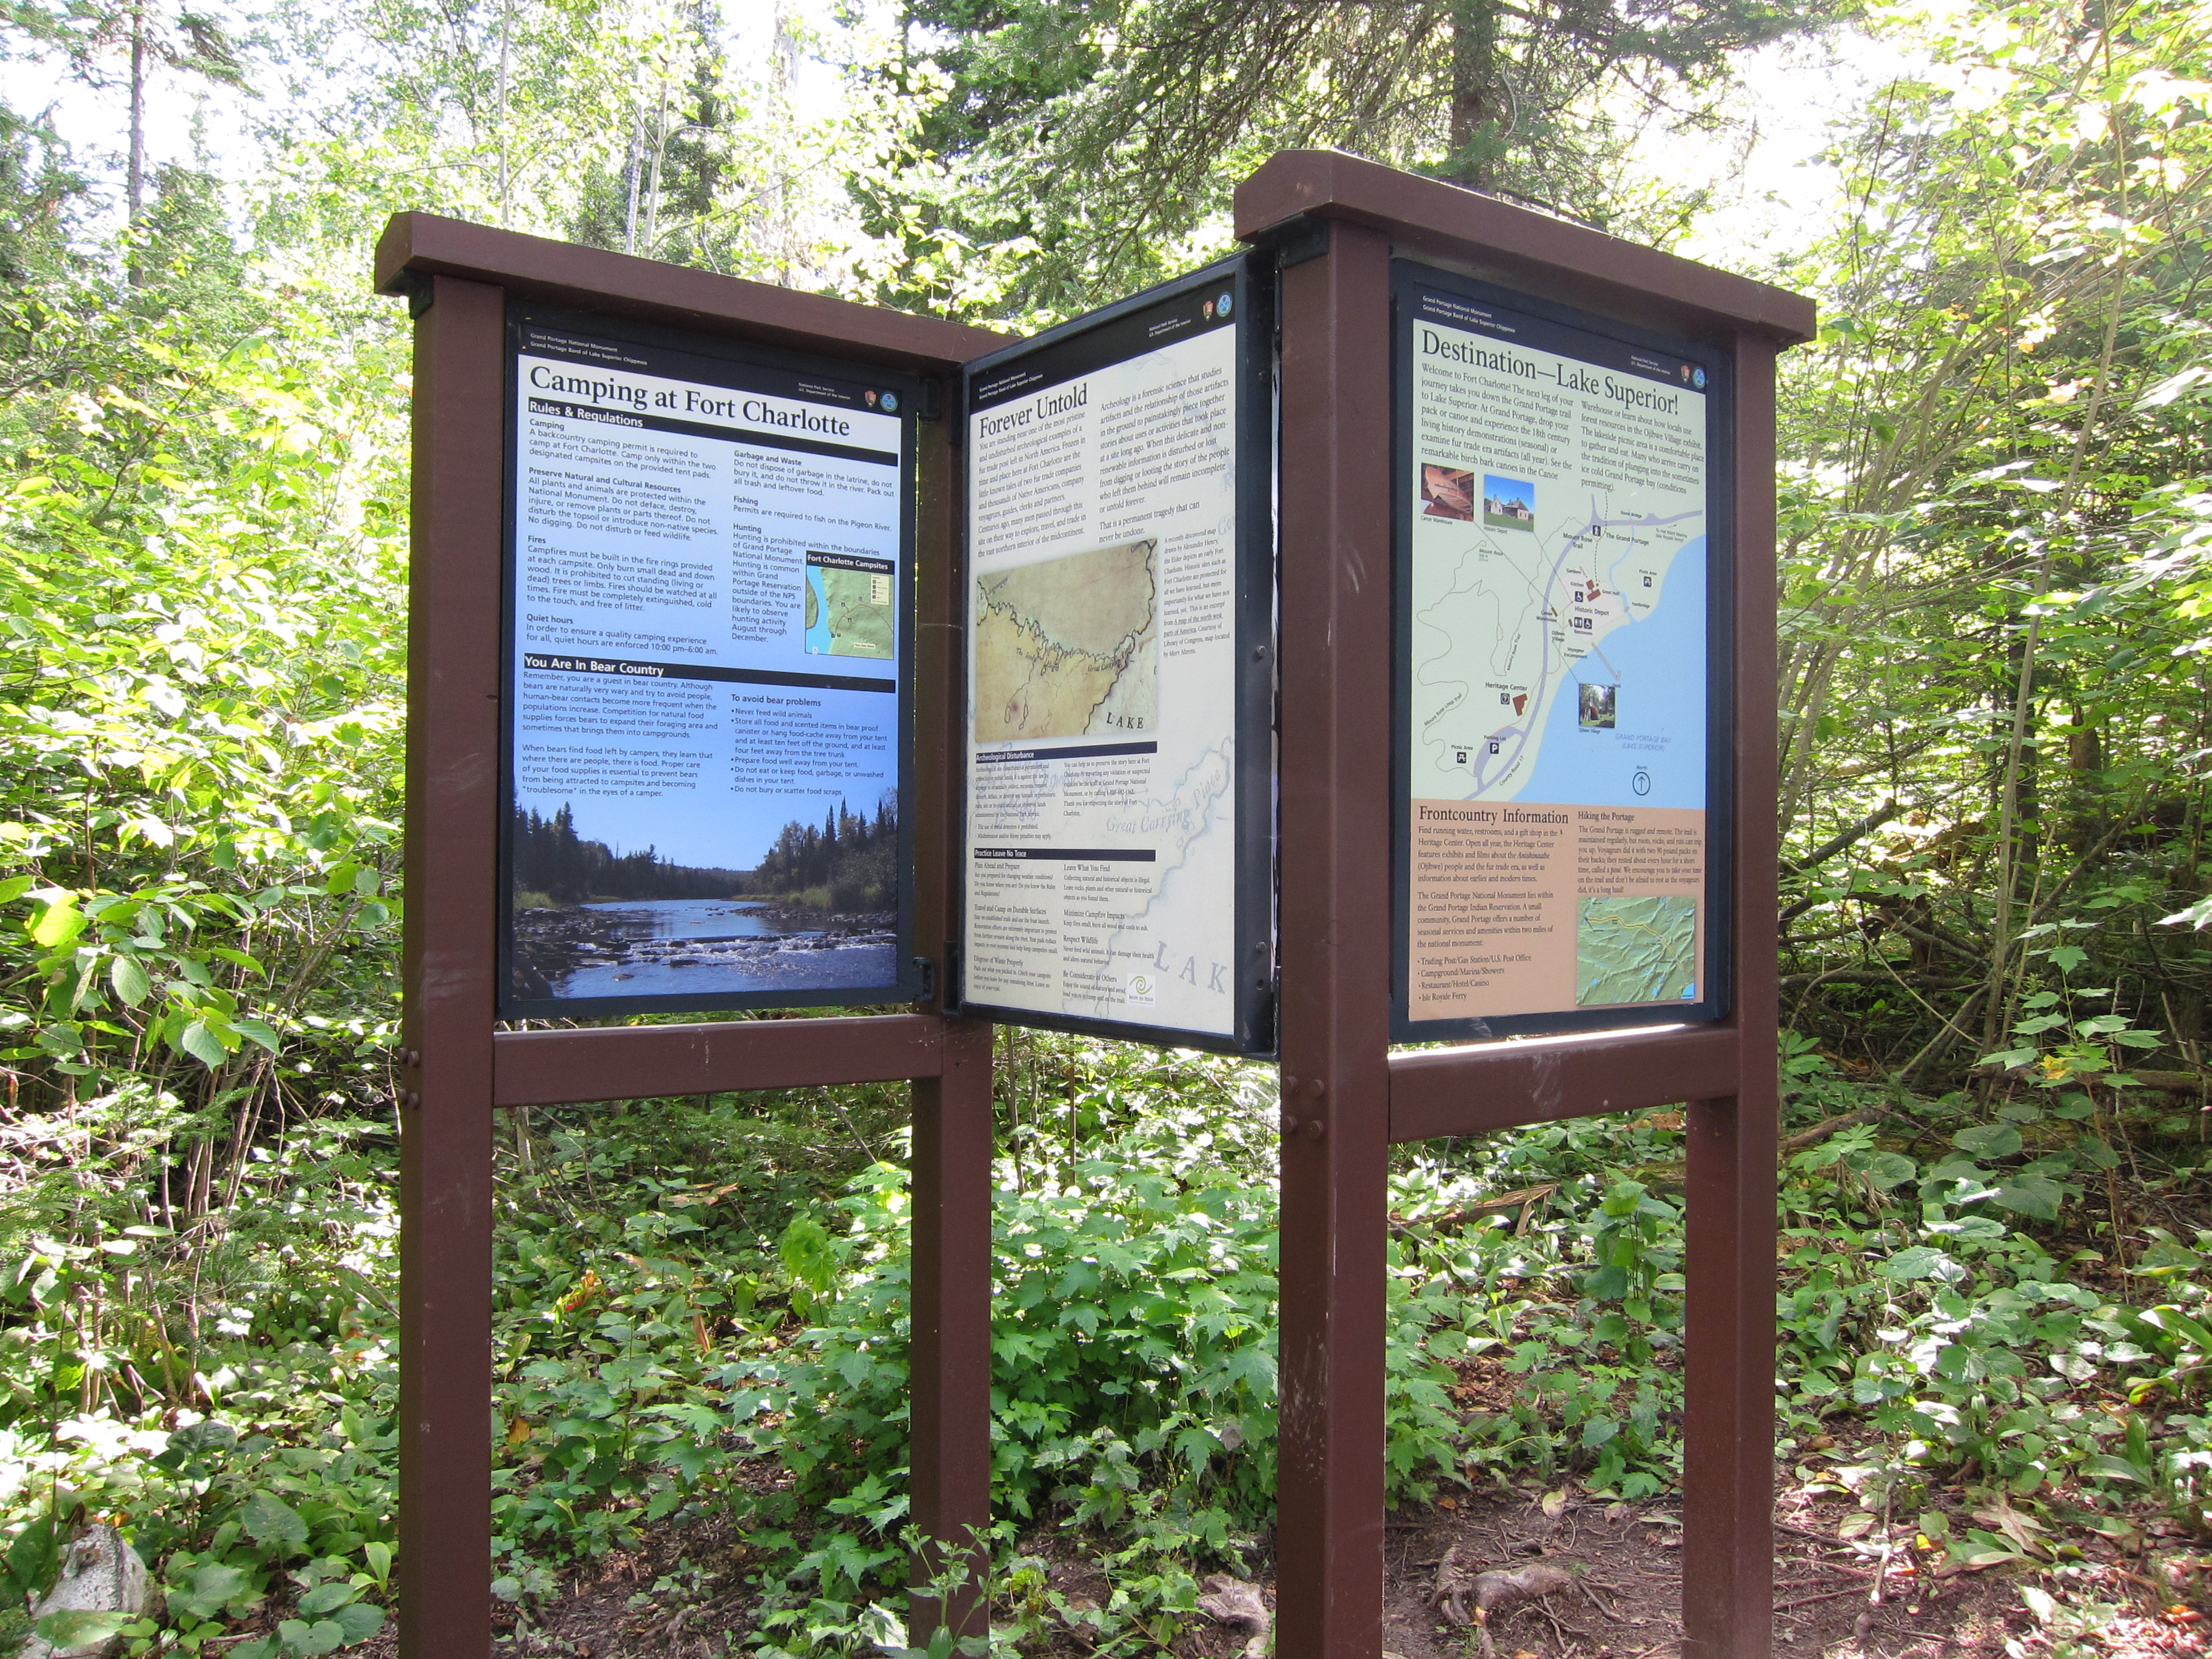 Informative panels mounted in wooden kiosk.